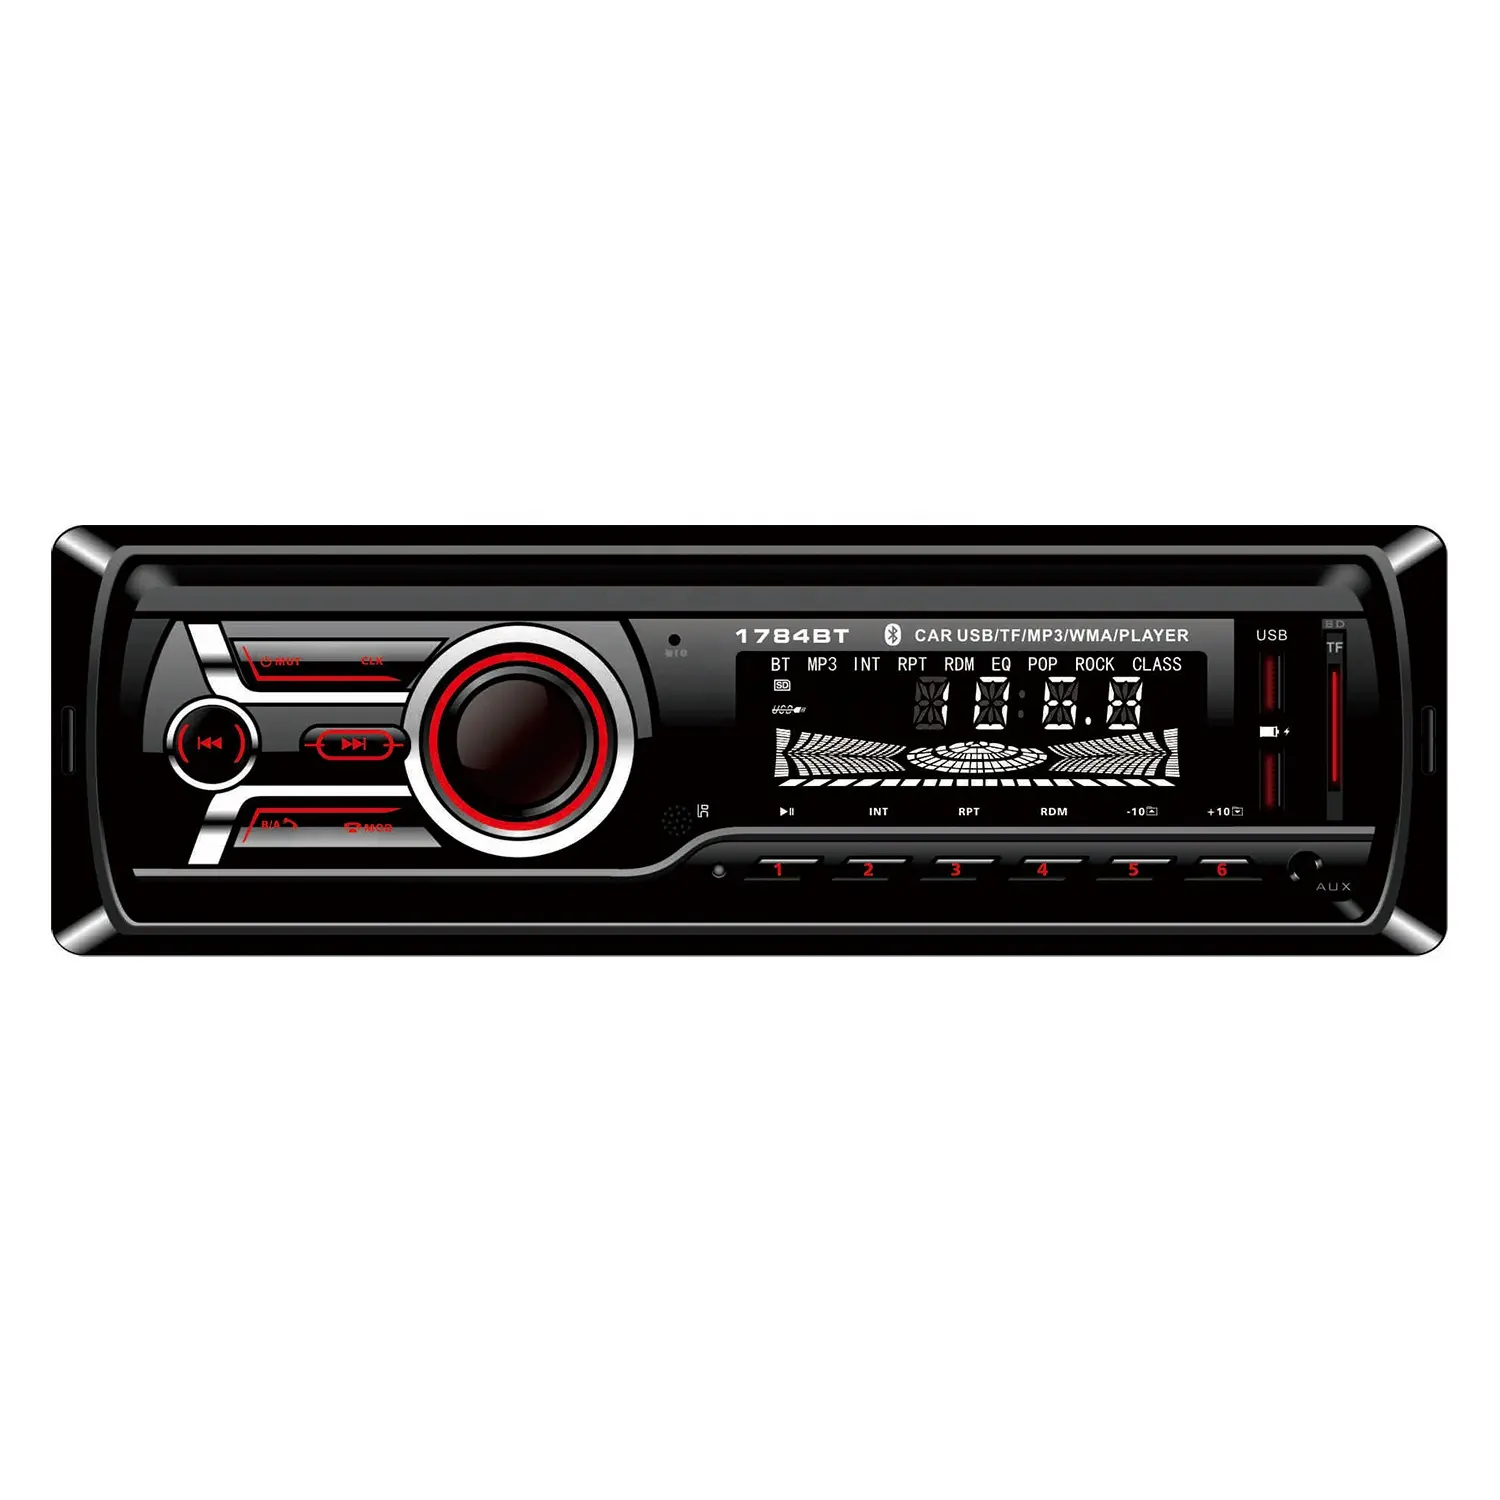 Pemutar MP3 Radio mobil 7 warna 1Din Stereo Autoradio DAB + FM USB SD AUX SWC pabrik grosir dengan Bluetooth mendukung Format WMA